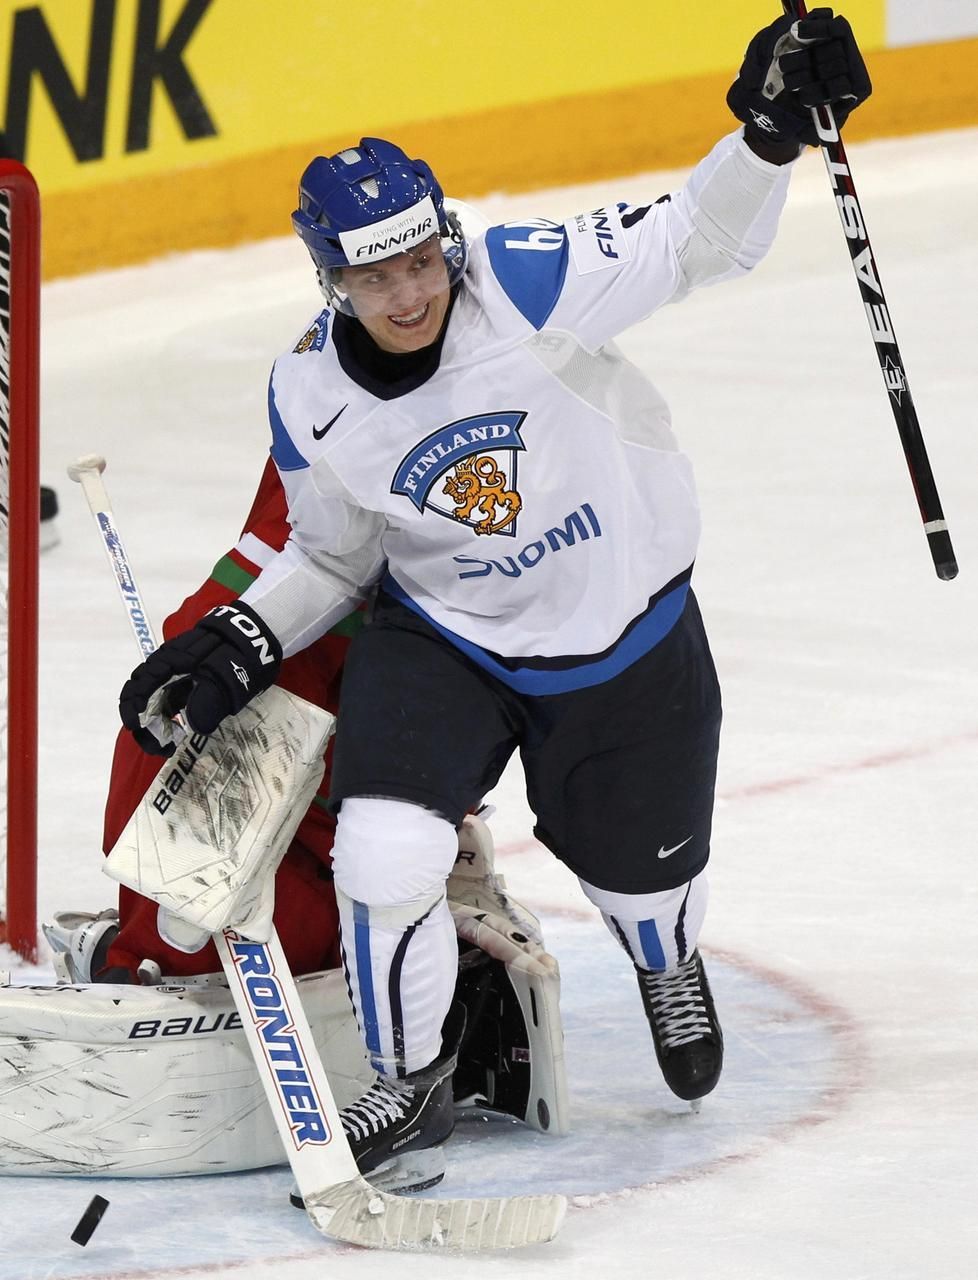 MS v hokeji 2012: Finsko - Bělorusko (Granlund, radost)